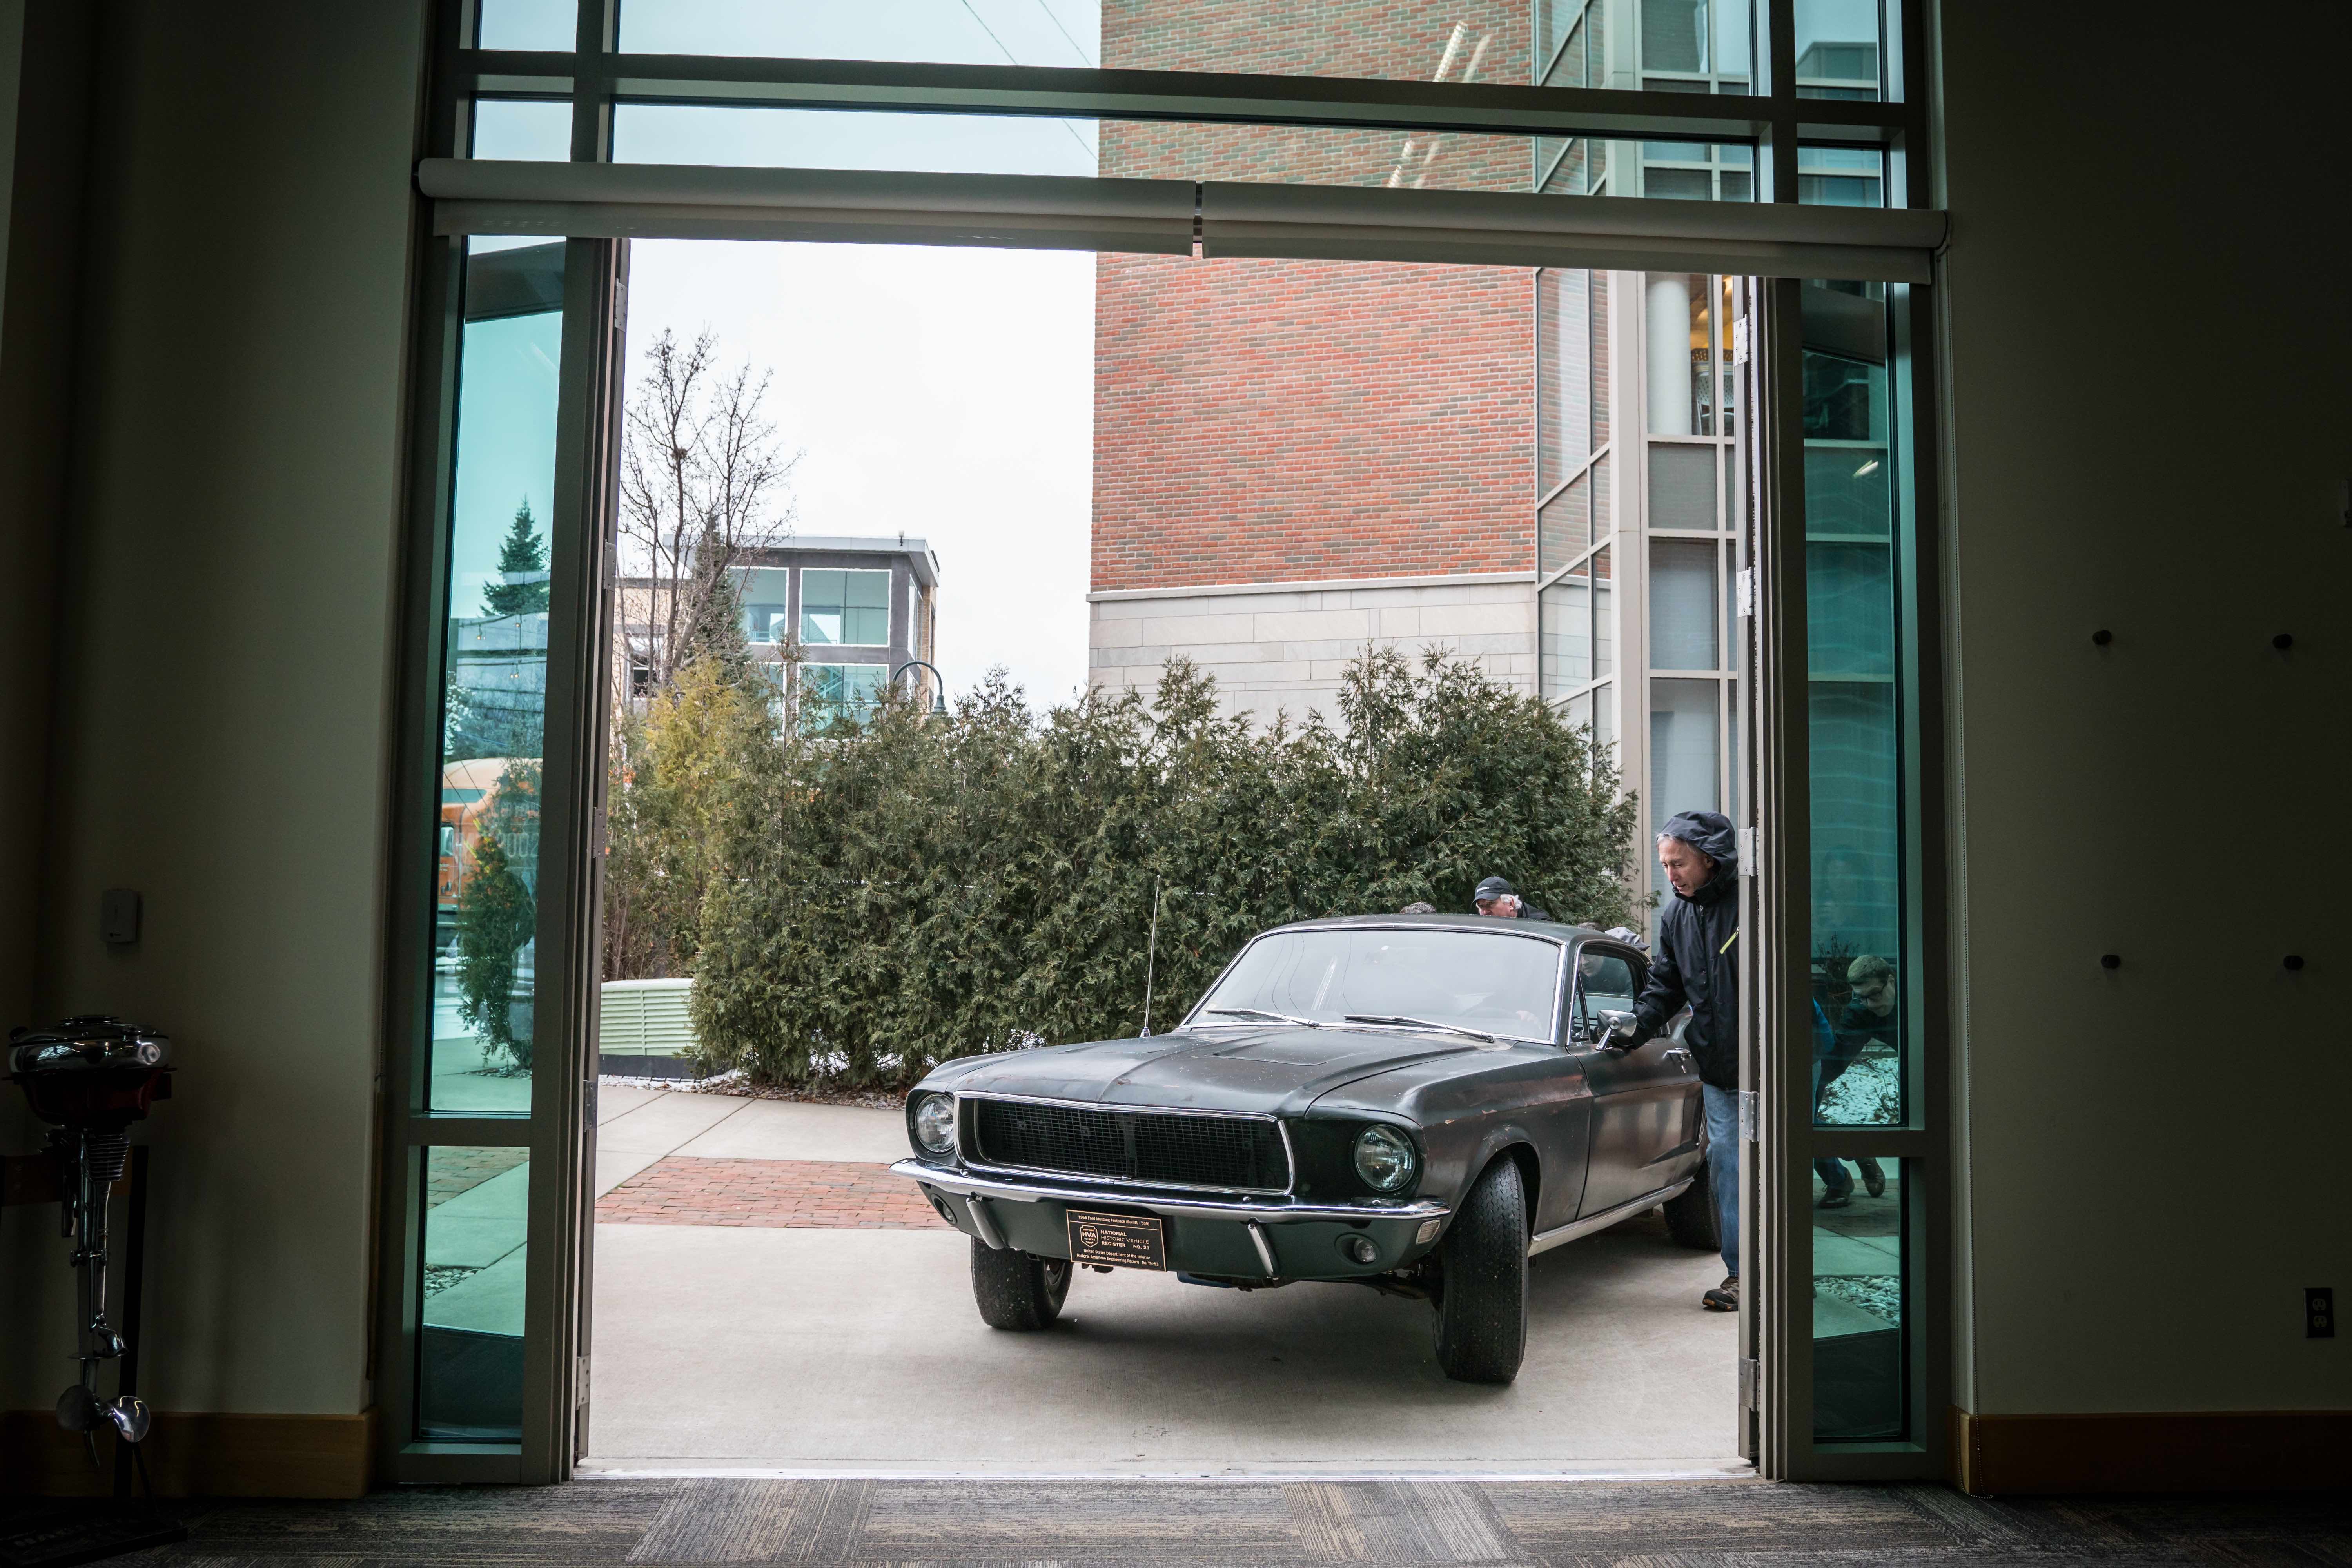 'Bullitt' Mustang hero car on display in Traverse City, Michigan | ClassicCar